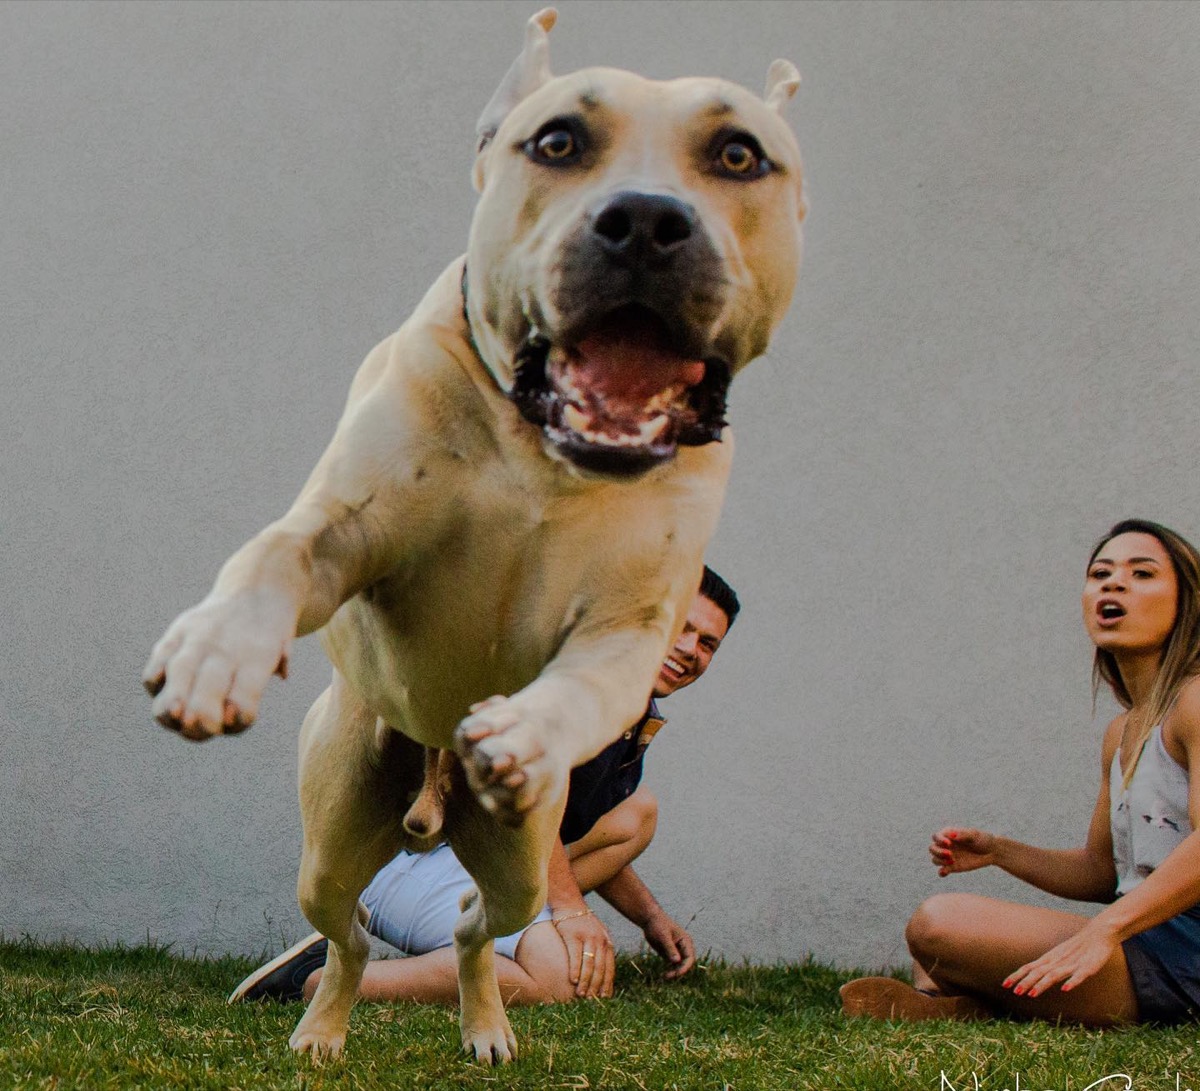 Dog photobombs parents' engagement shoot